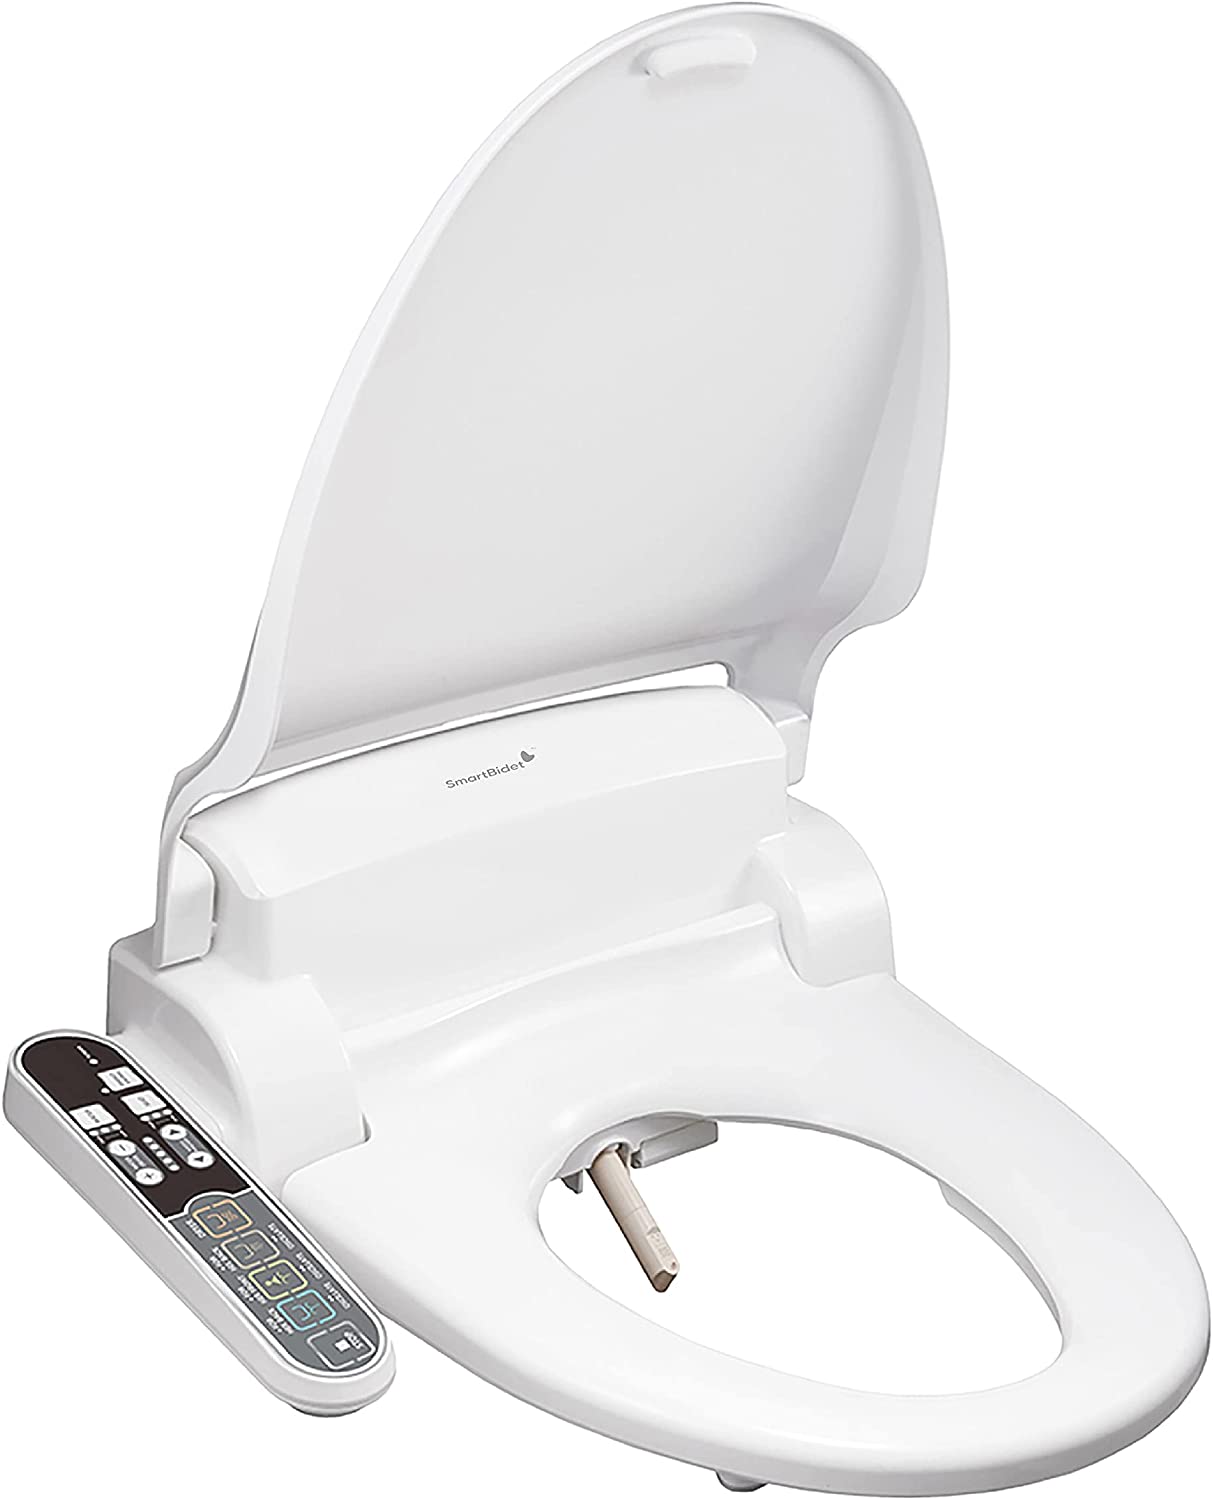 SmartBidet SB-2000 Electric Bidet Seat for Round Toilets